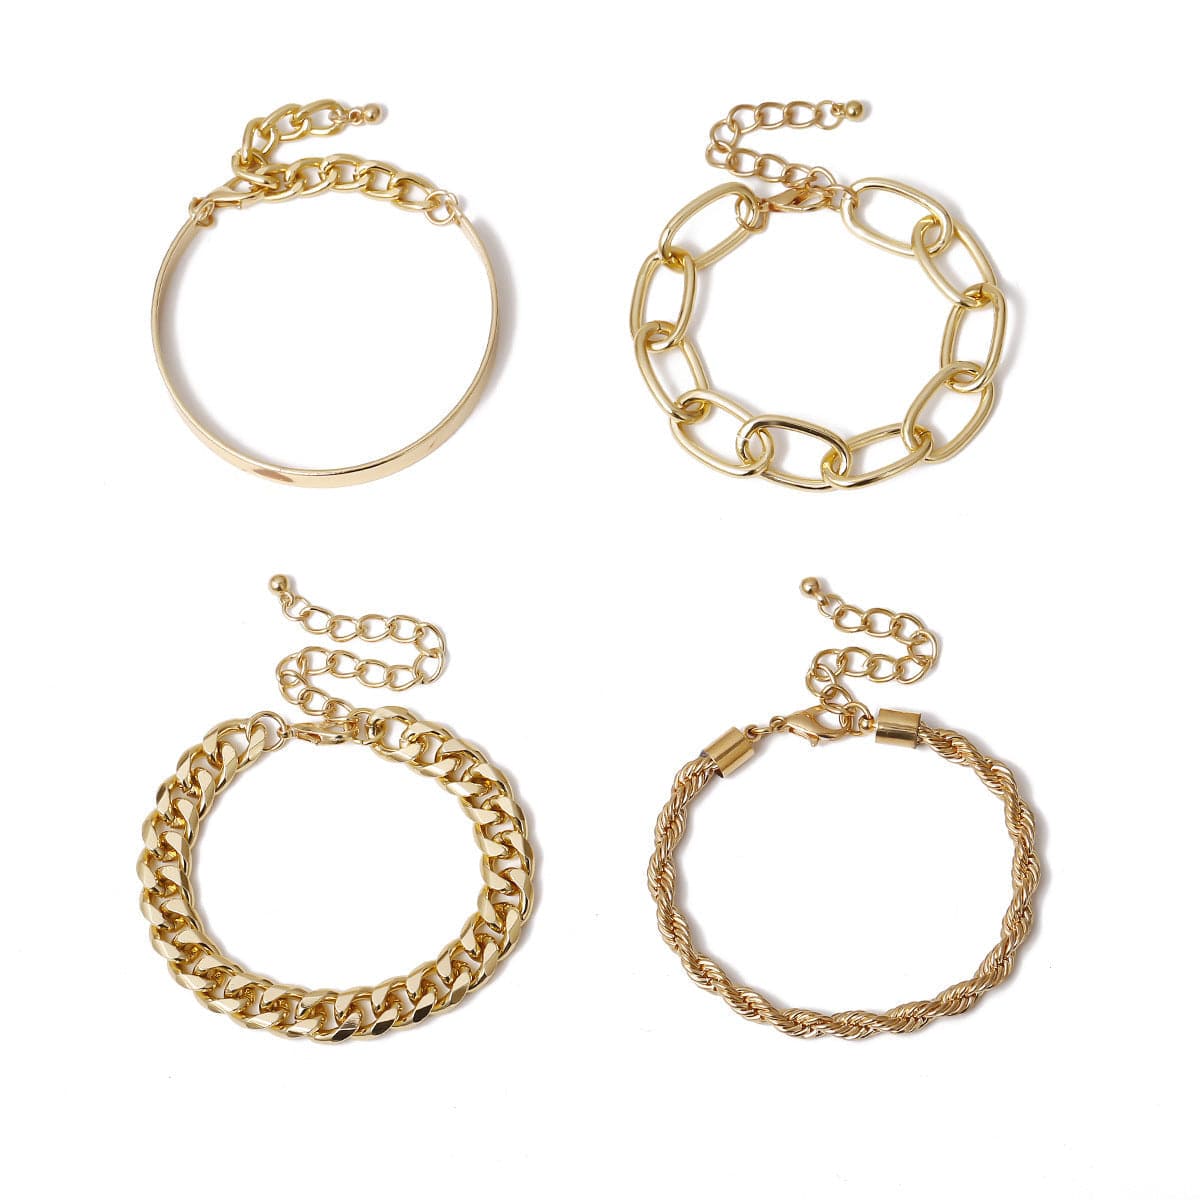 18K Gold-Plated Curb Chain Bracelet Set